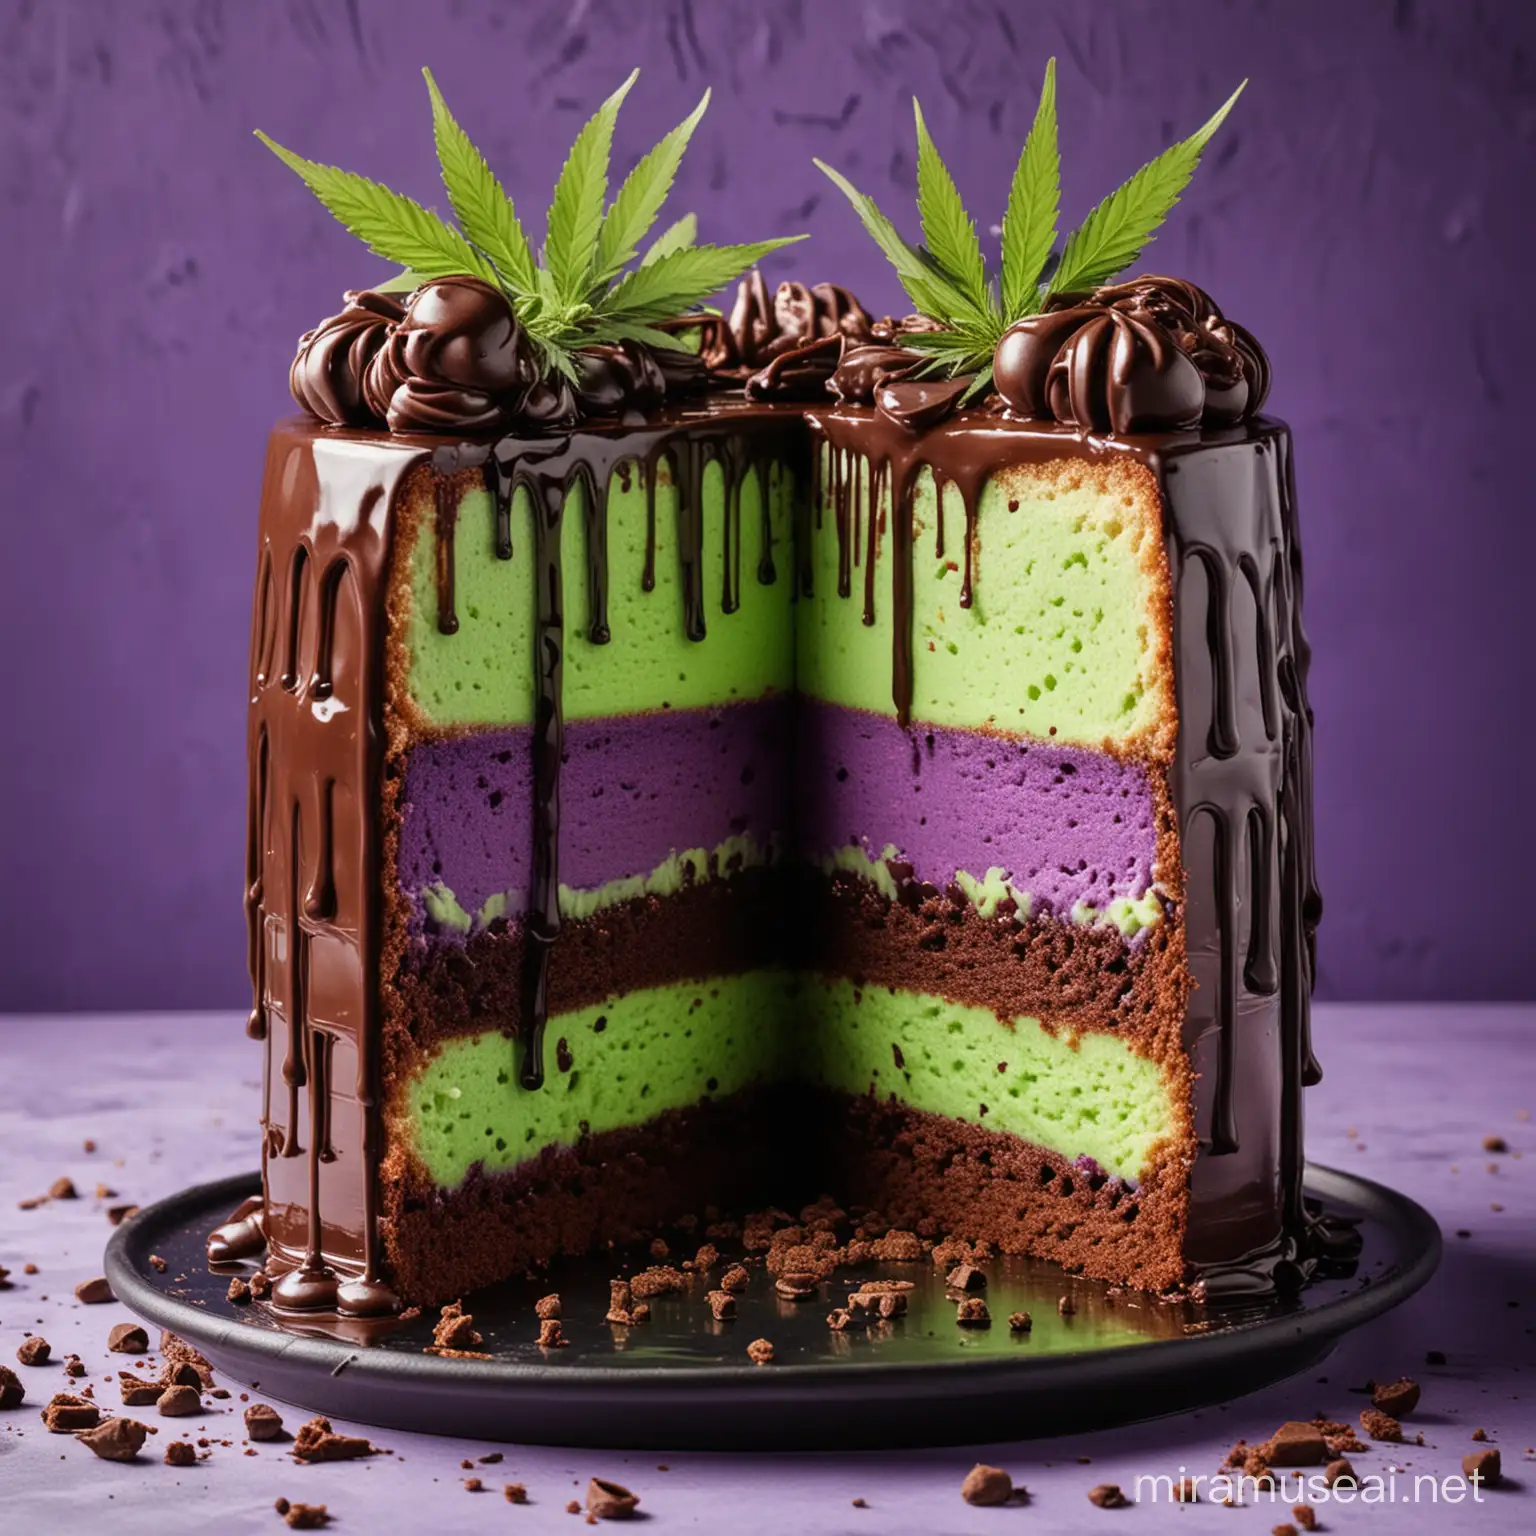 Vibrant CannabisThemed Cake with Chocolate Drizzle